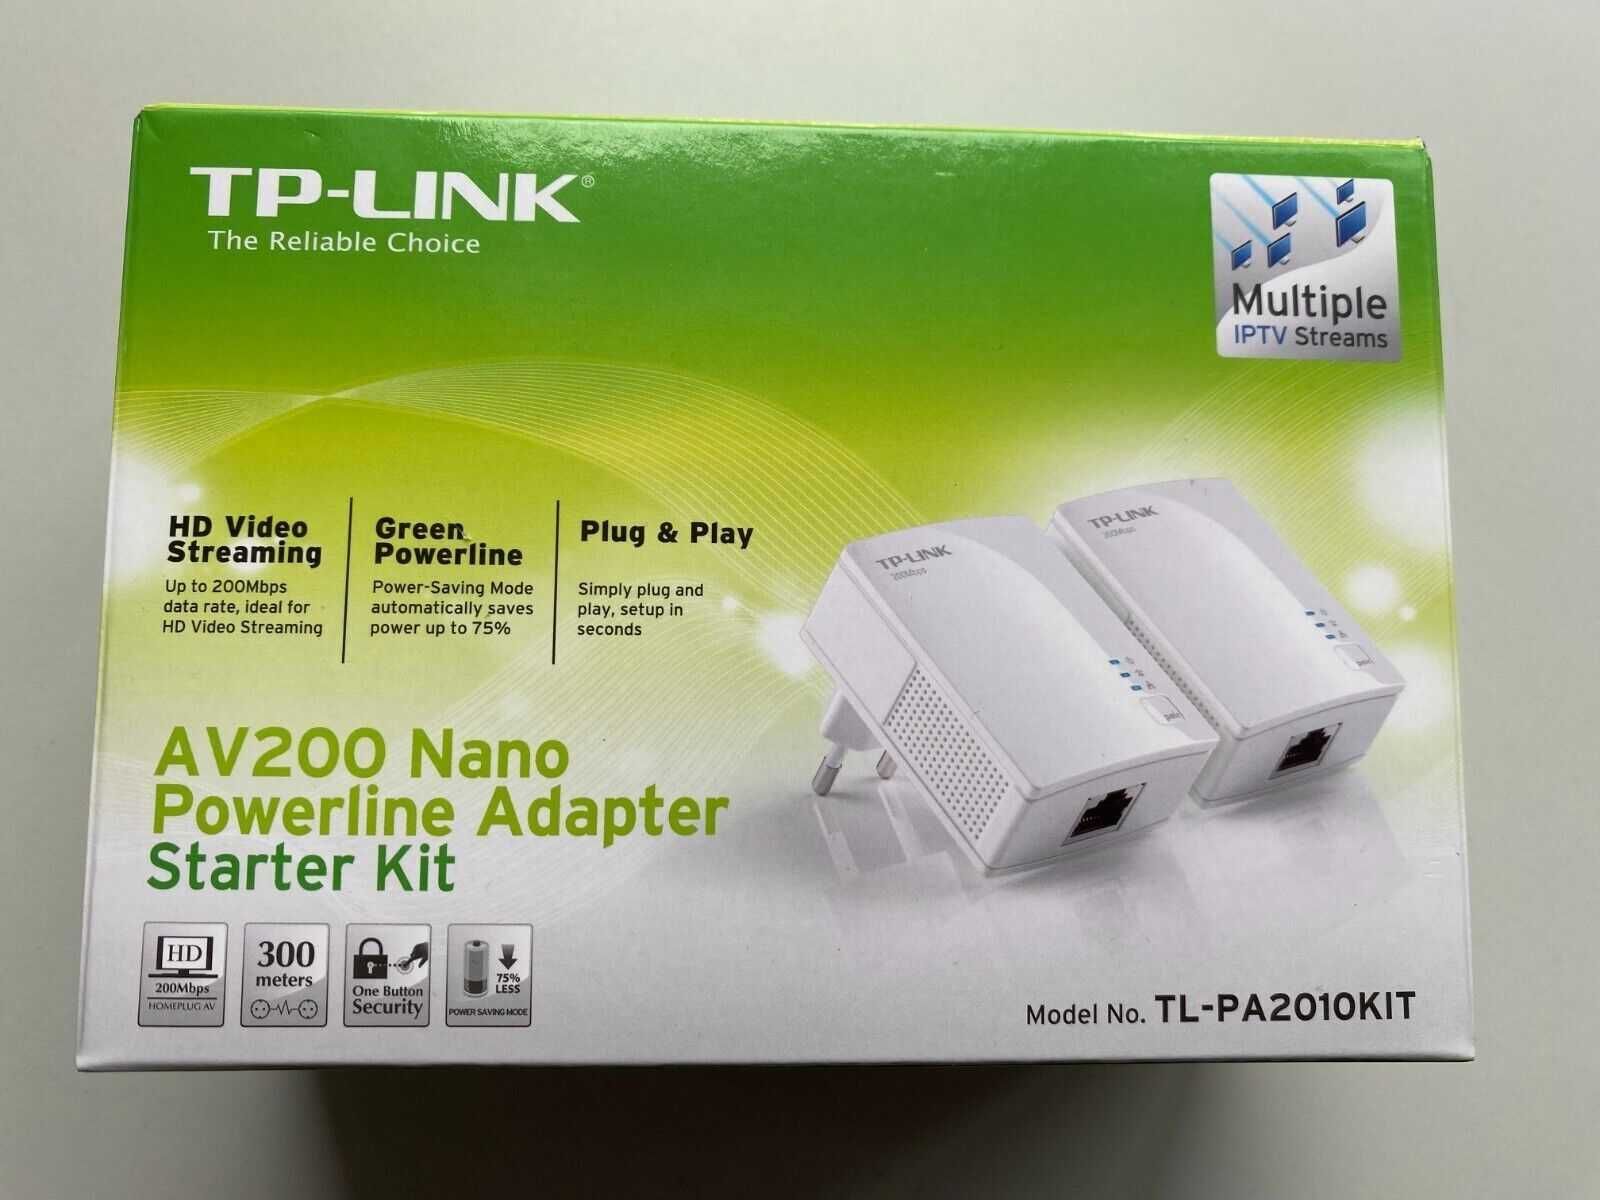 Промо цена: Нов Tp-Link AV200 Lan Powerline Адаптер за ел. мрежа